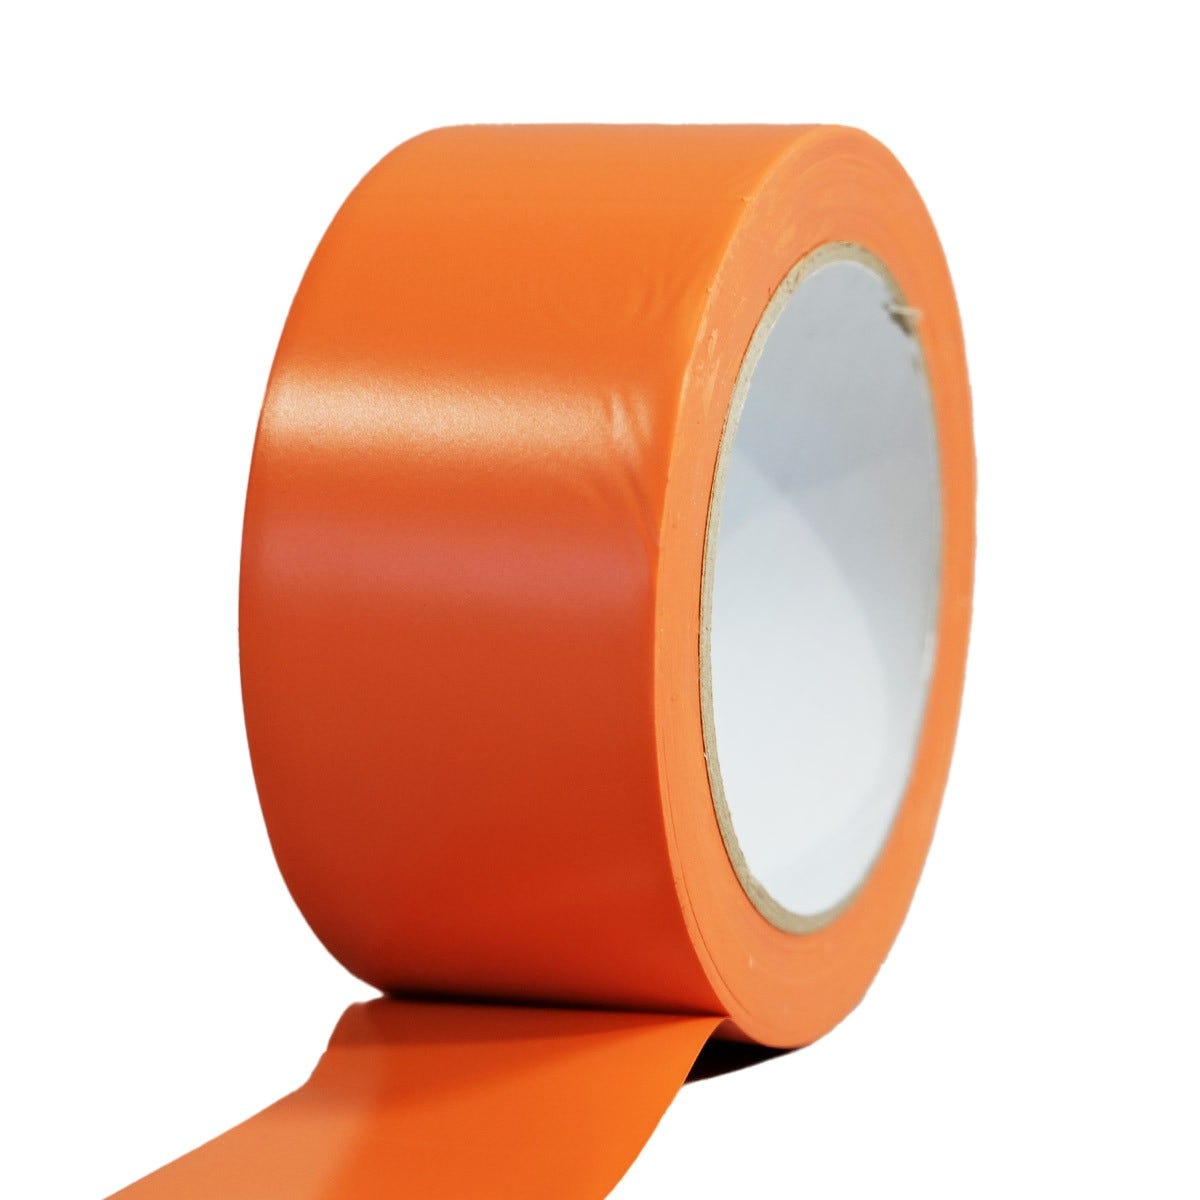 Rouleau de scotch, ruban adhésif en PVC orange